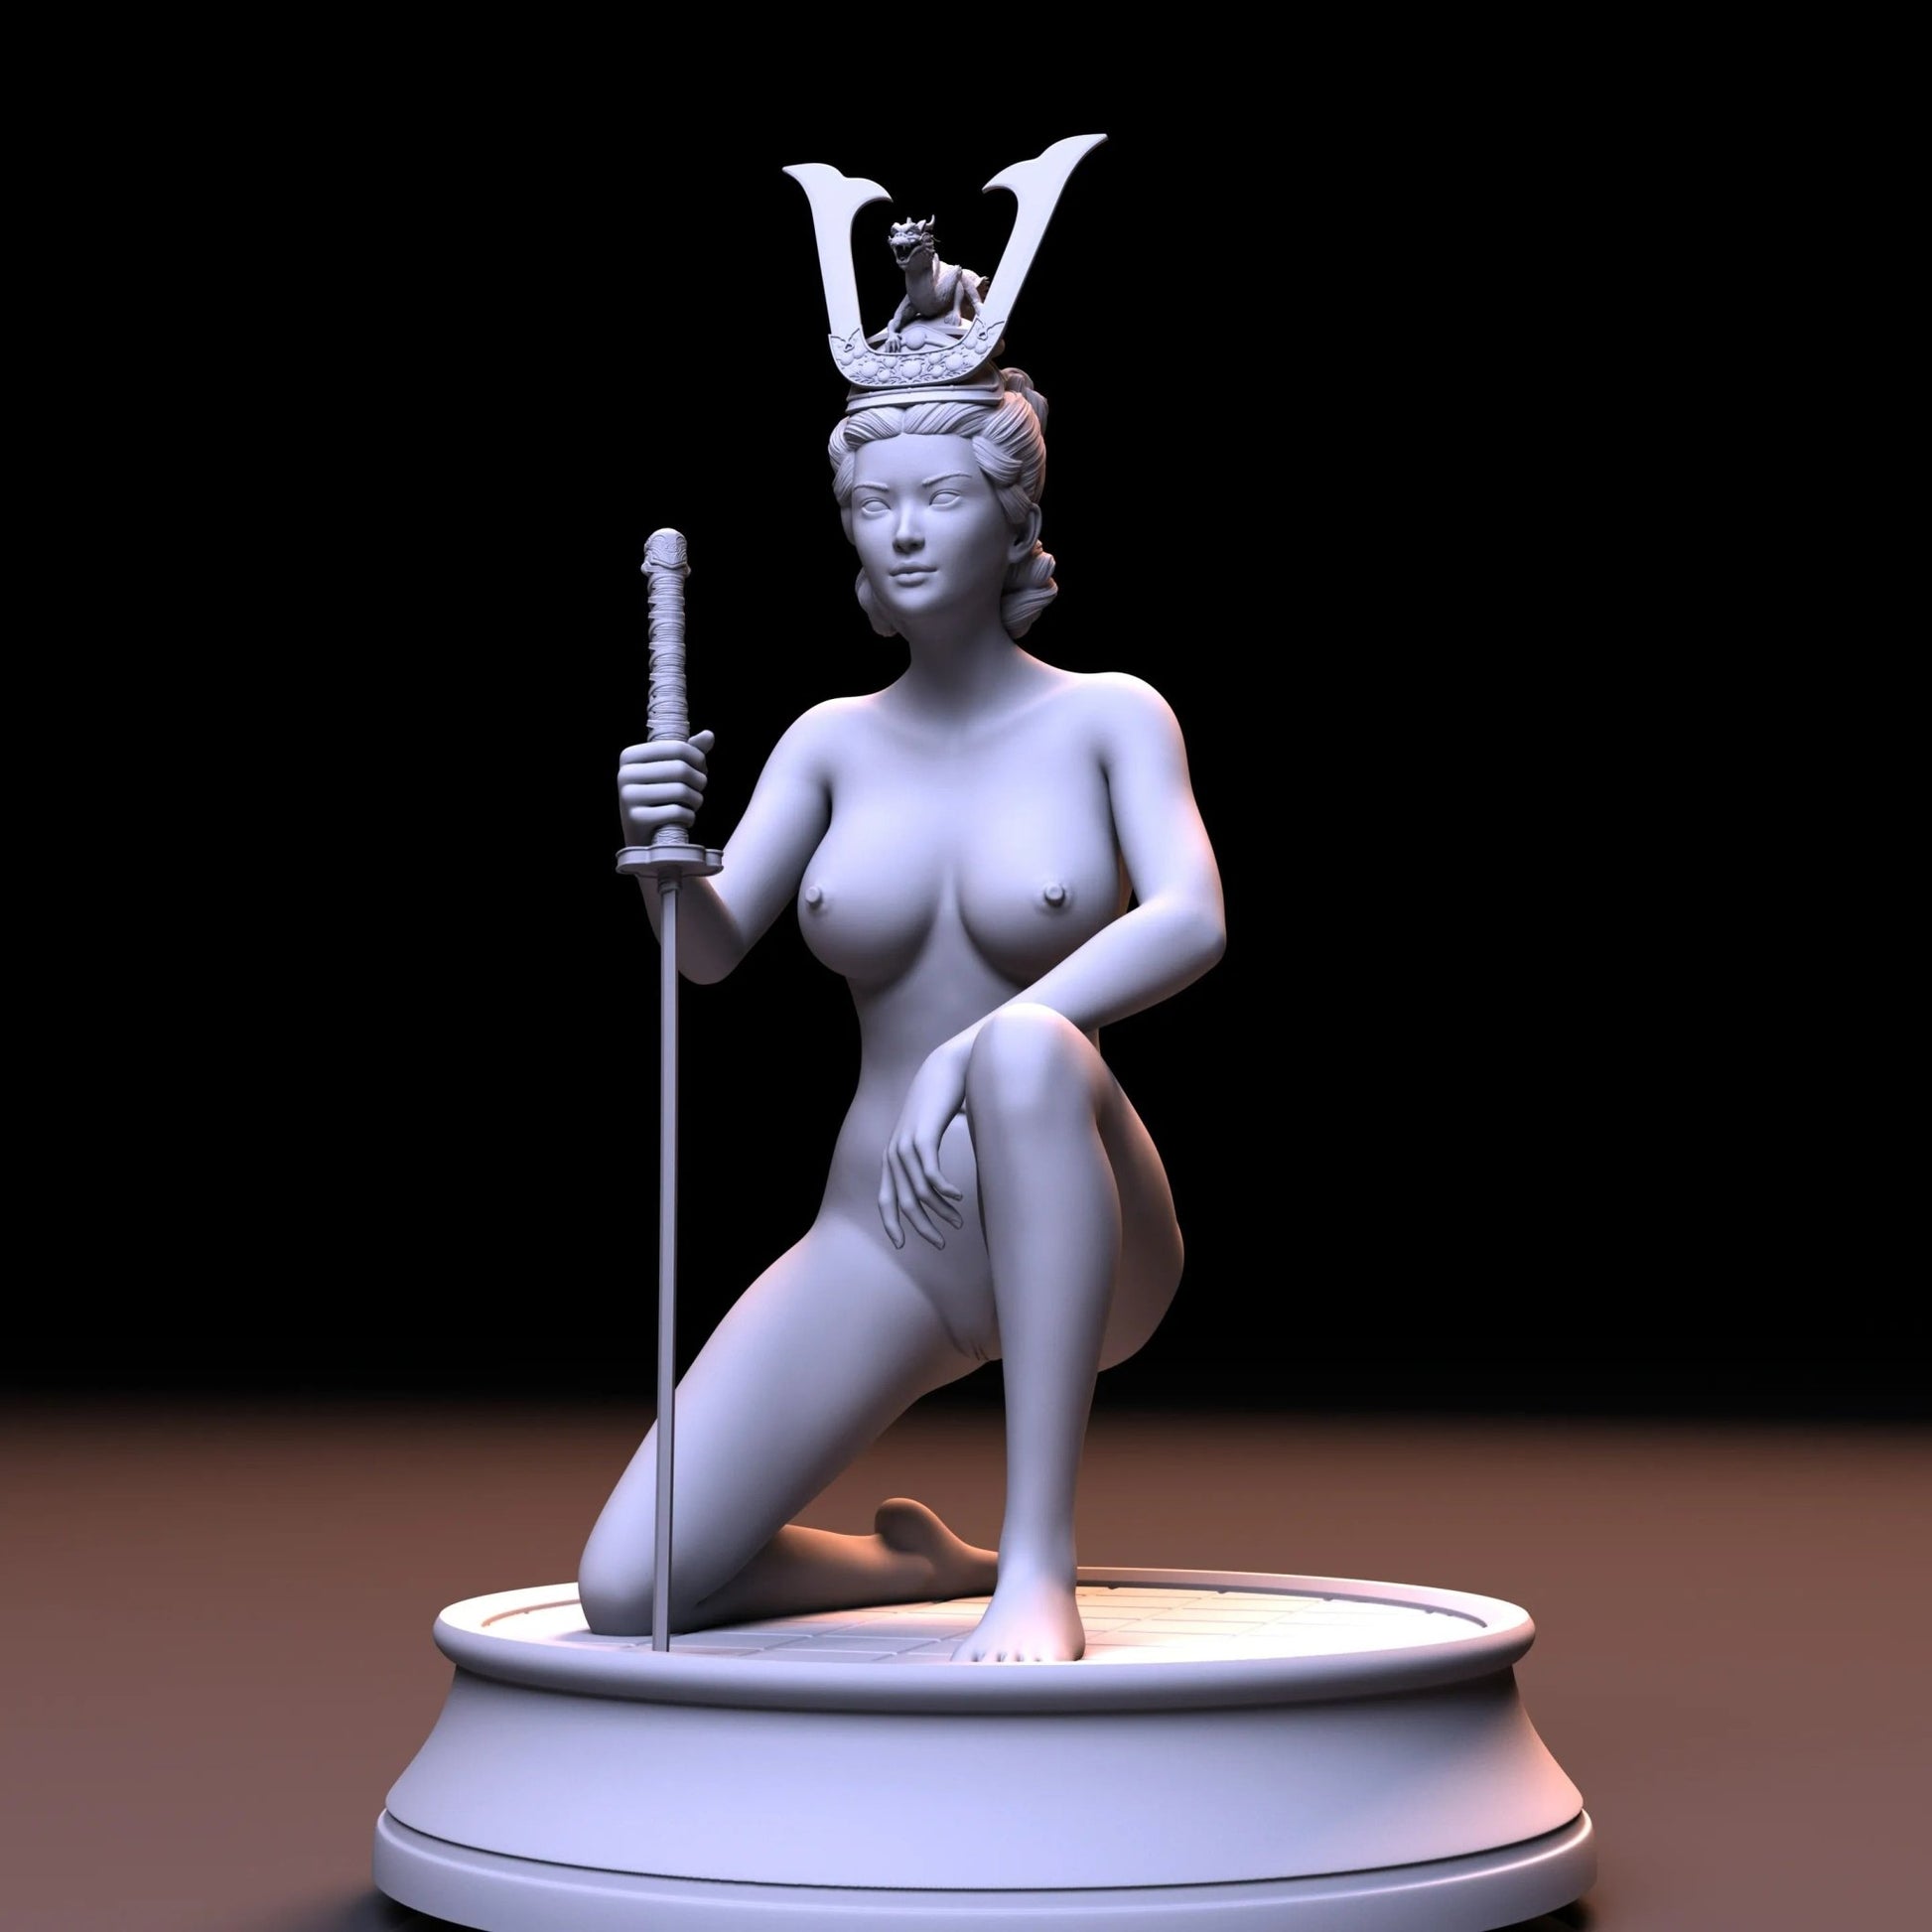 Woman Samurai | 3D Printed | Fanart | Unpainted | NSFW | Figurine | Figure | Miniature |